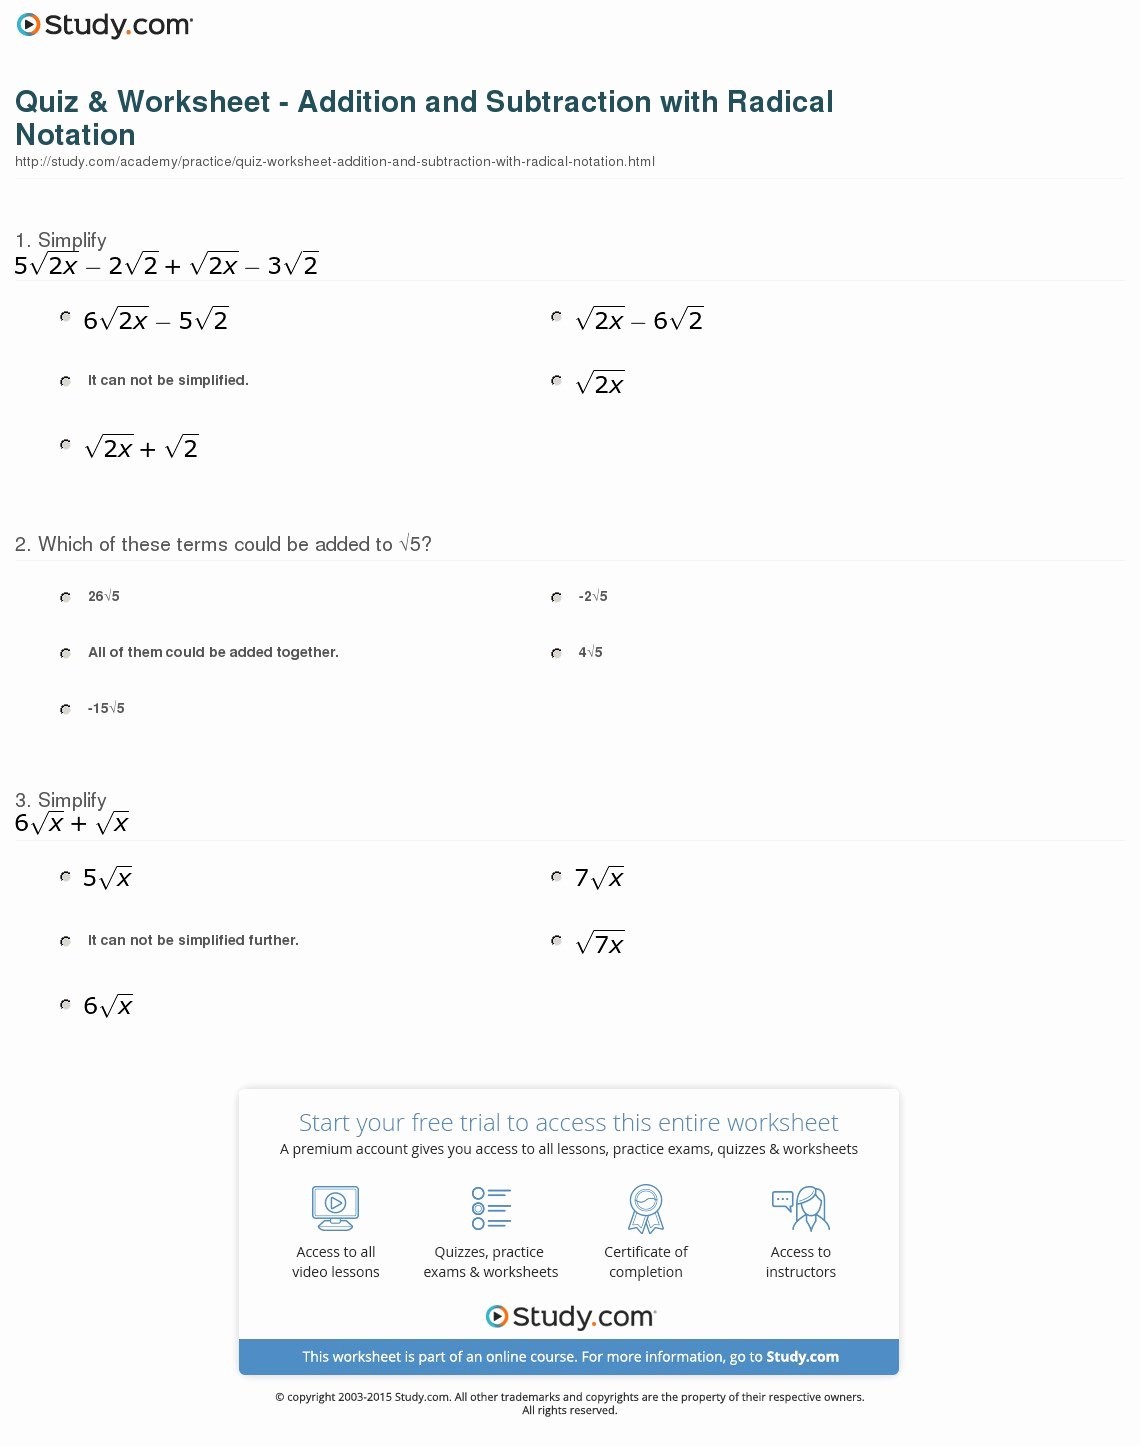 Adding and Subtracting Radicals Worksheet Elegant Quiz &amp; Worksheet Addition and Subtraction with Radical